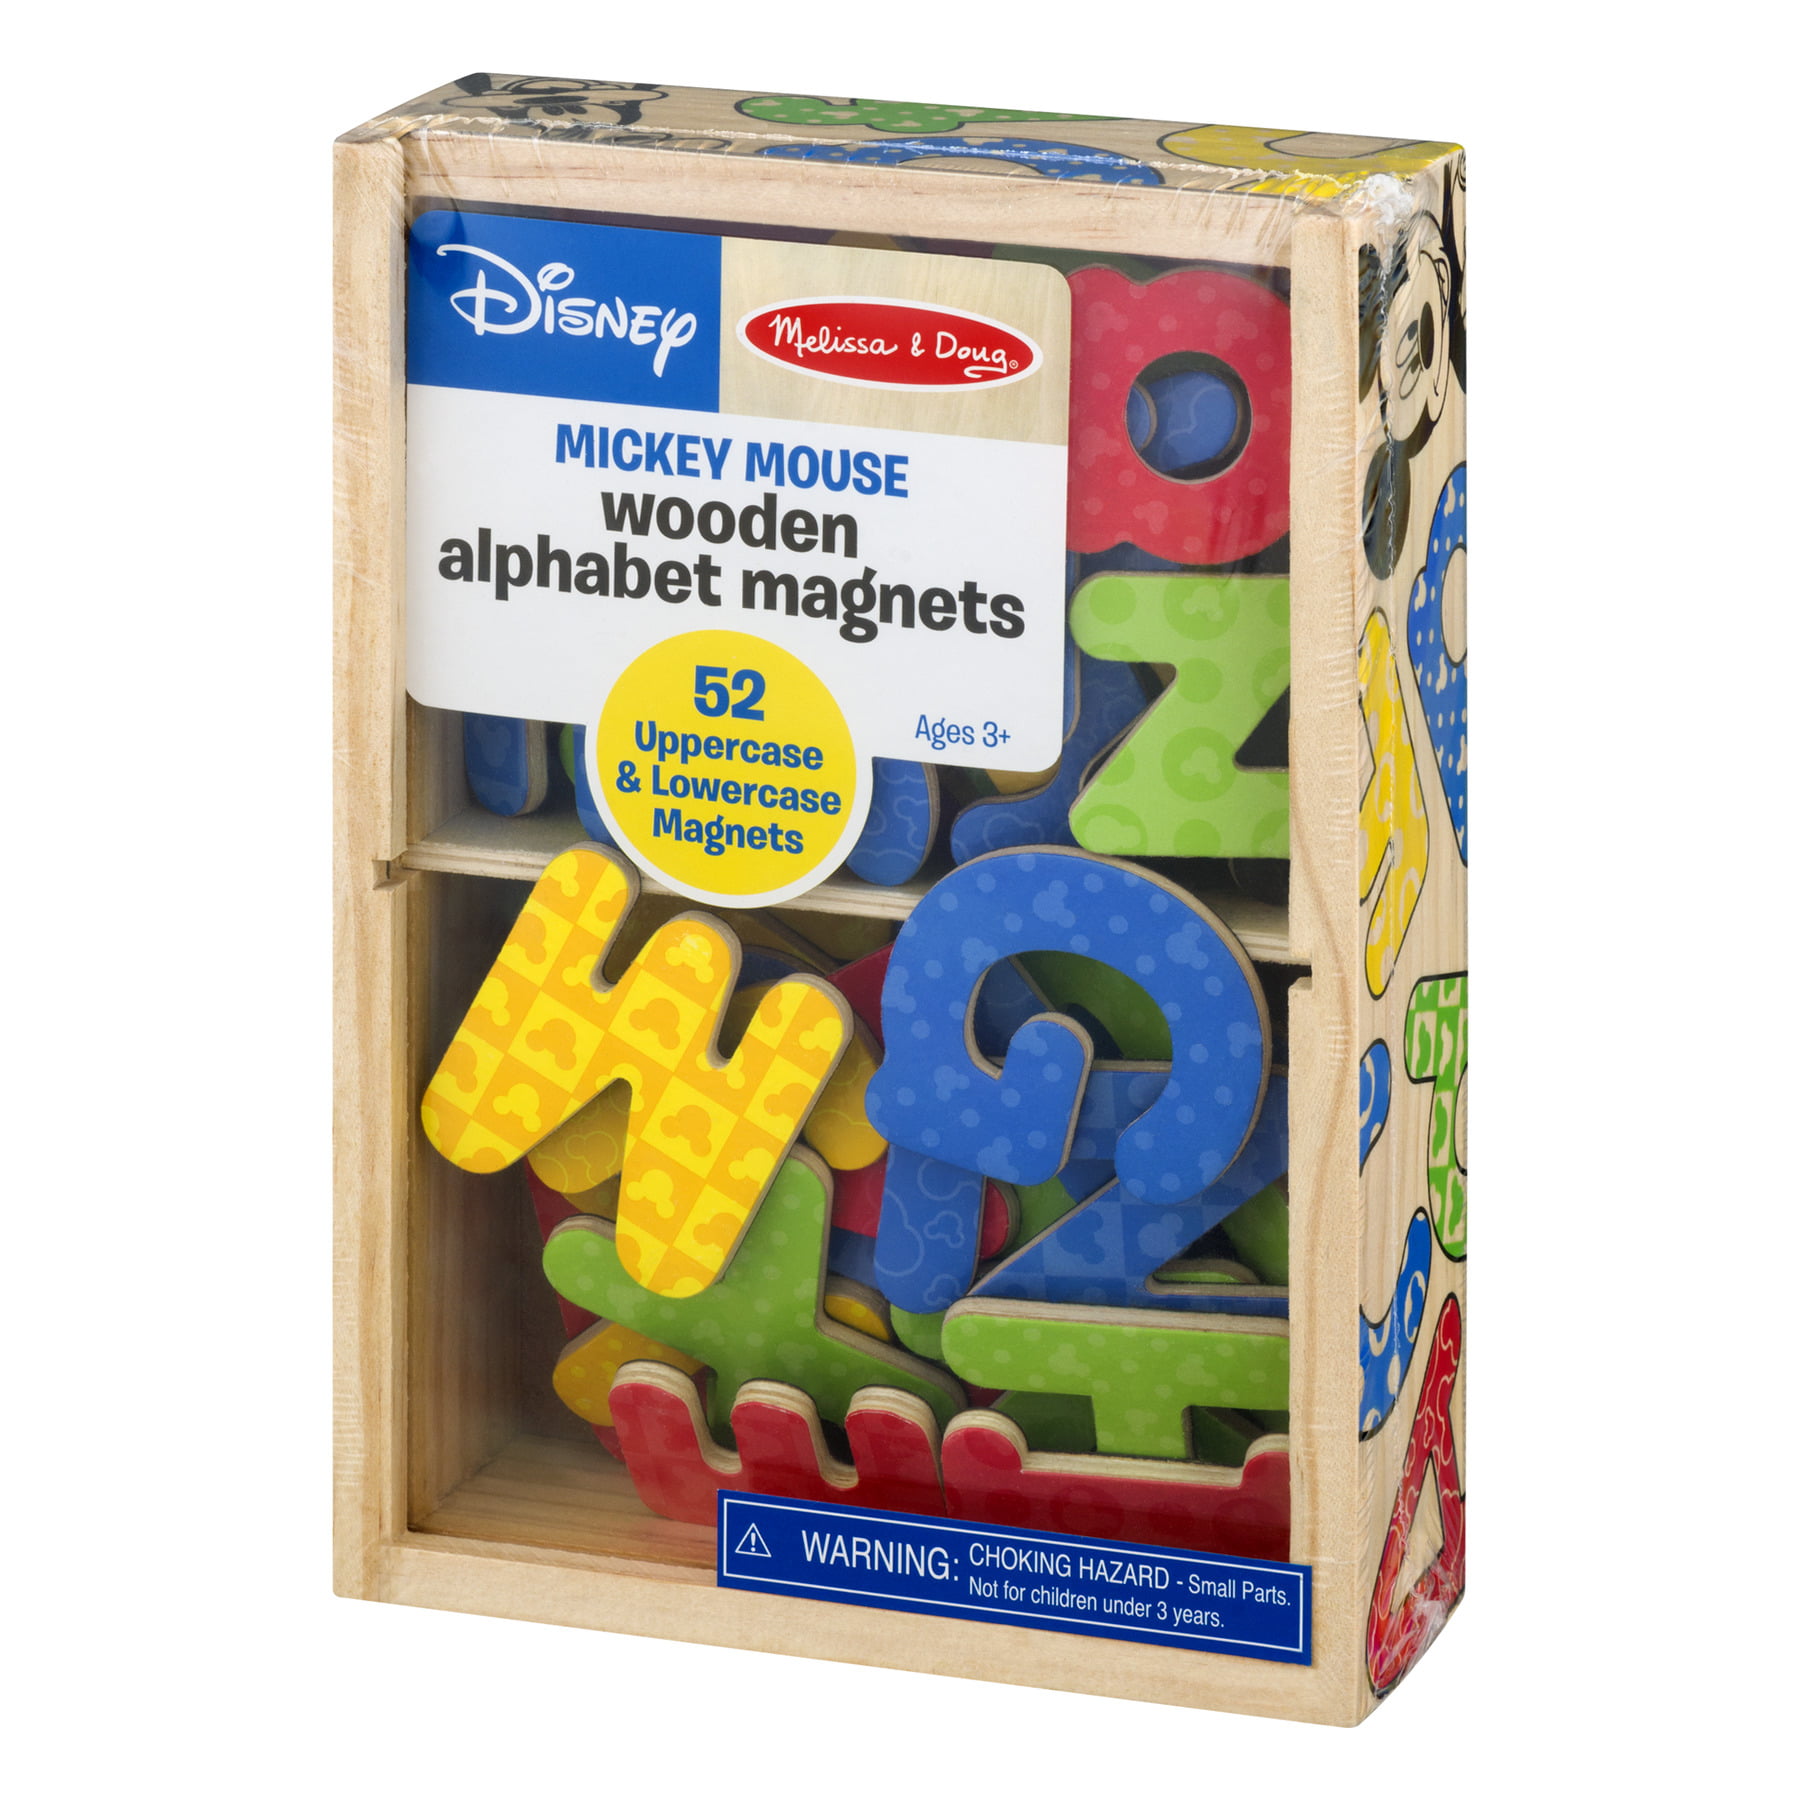 melissa doug alphabet magnets